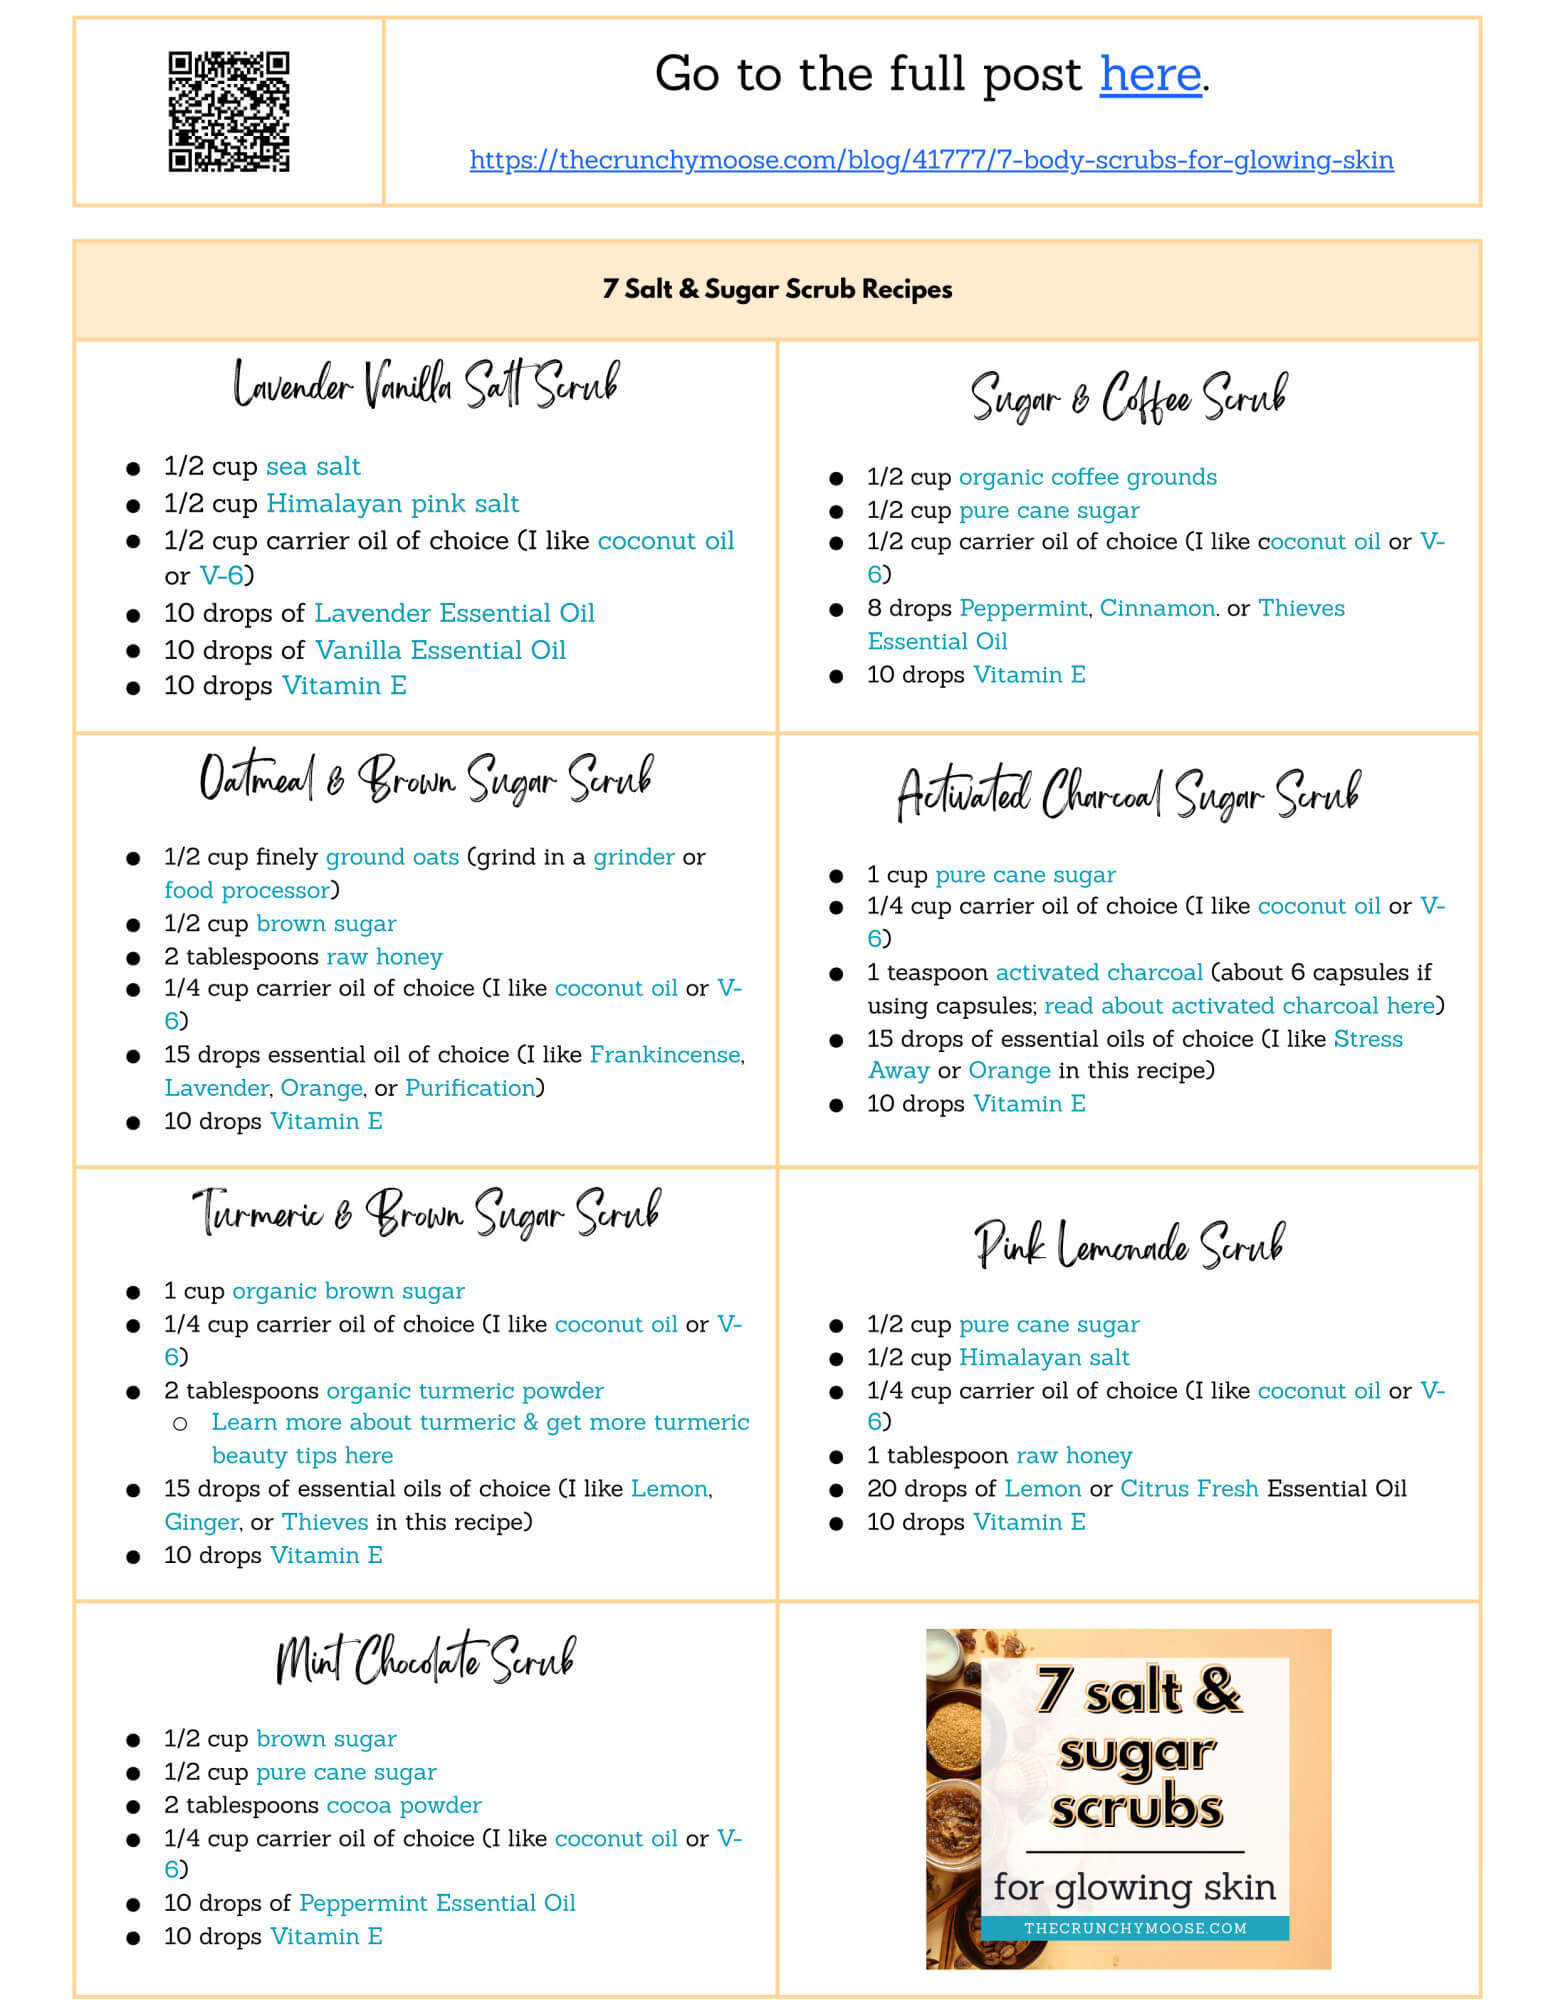 printable recipe cards for salt and sugar scrubs